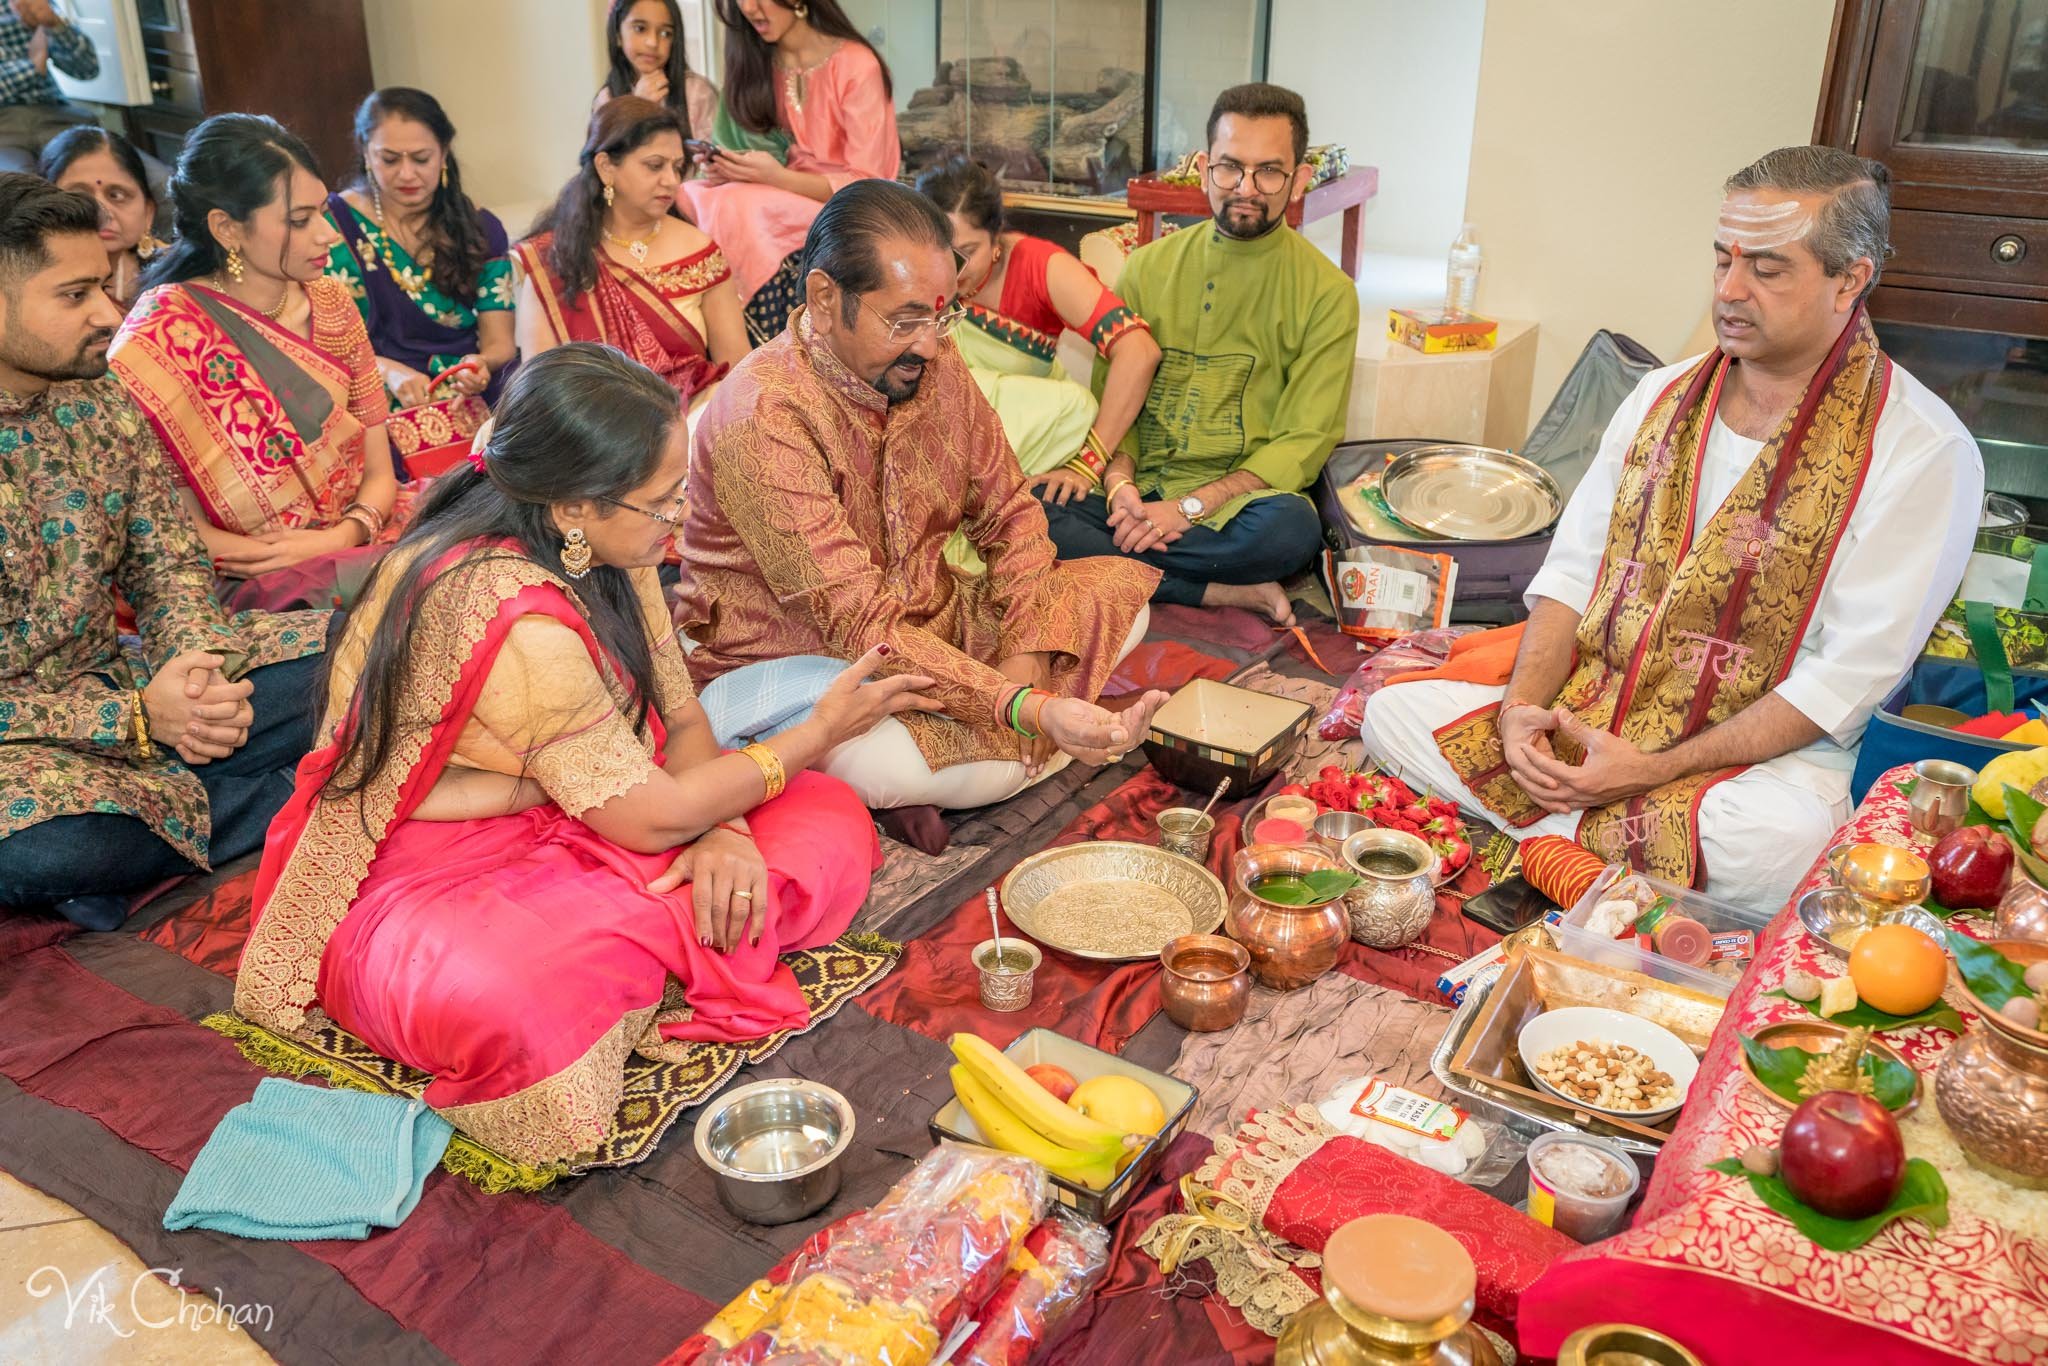 2022-02-03-Hely-&-Parth-Ganesh-Pooja-Indian-Wedding-Vik-Chohan-Photography-Photo-Booth-Social-Media-VCP-023.jpg